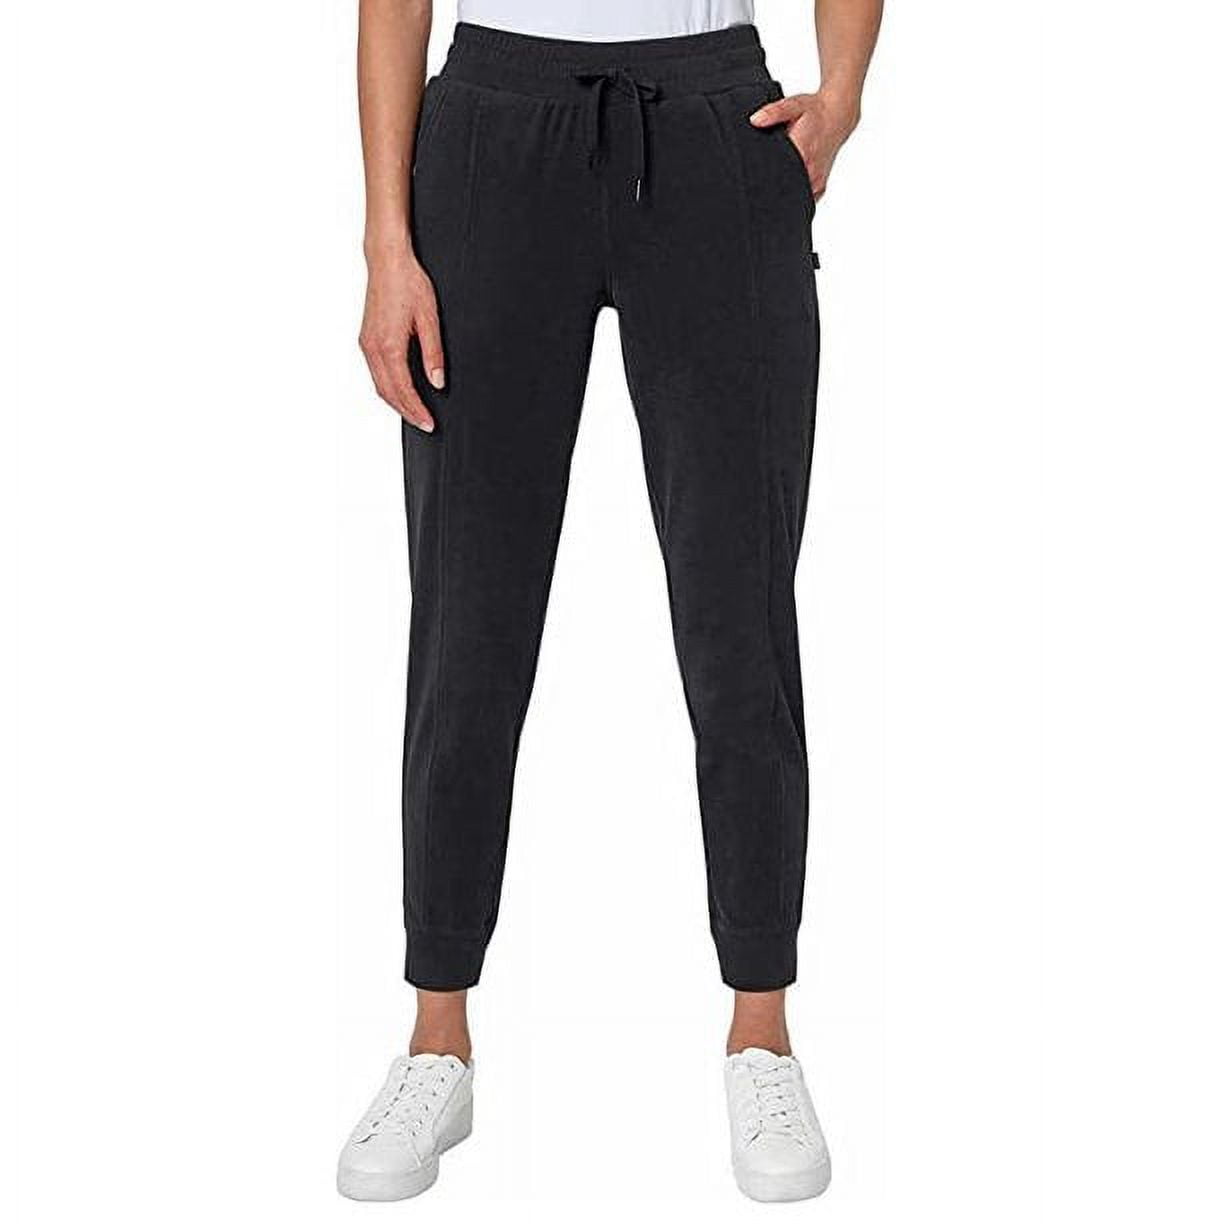 Mondetta Ladies' Size Medium, Cozy Warm Jogger Pants, Black 